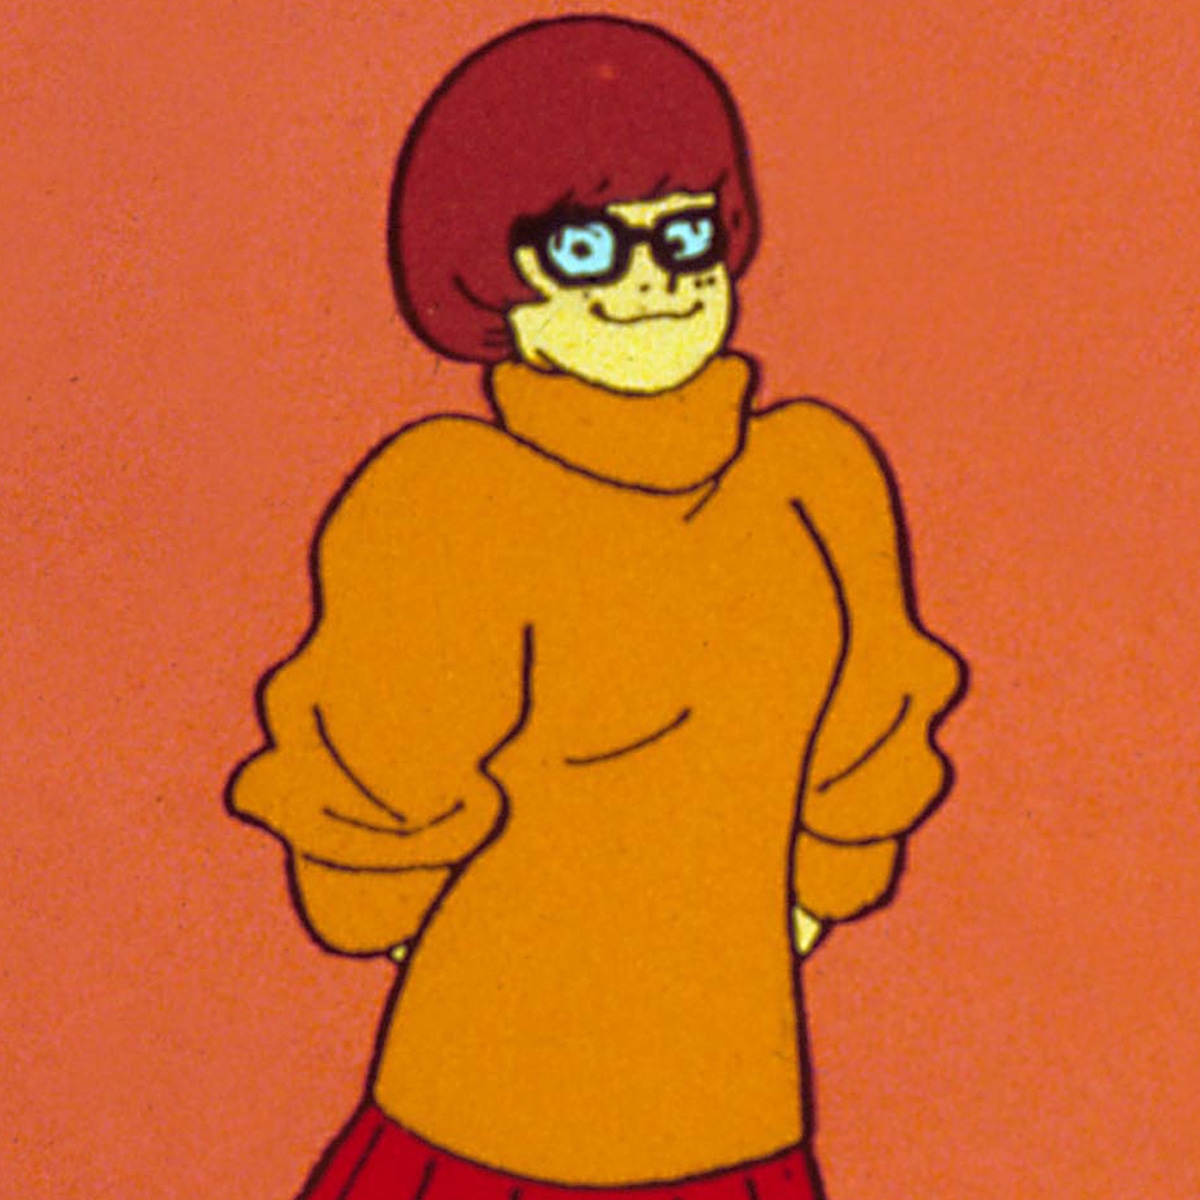 Scooby-Doo Confirms Velma's Sexuality in New Halloween Movie